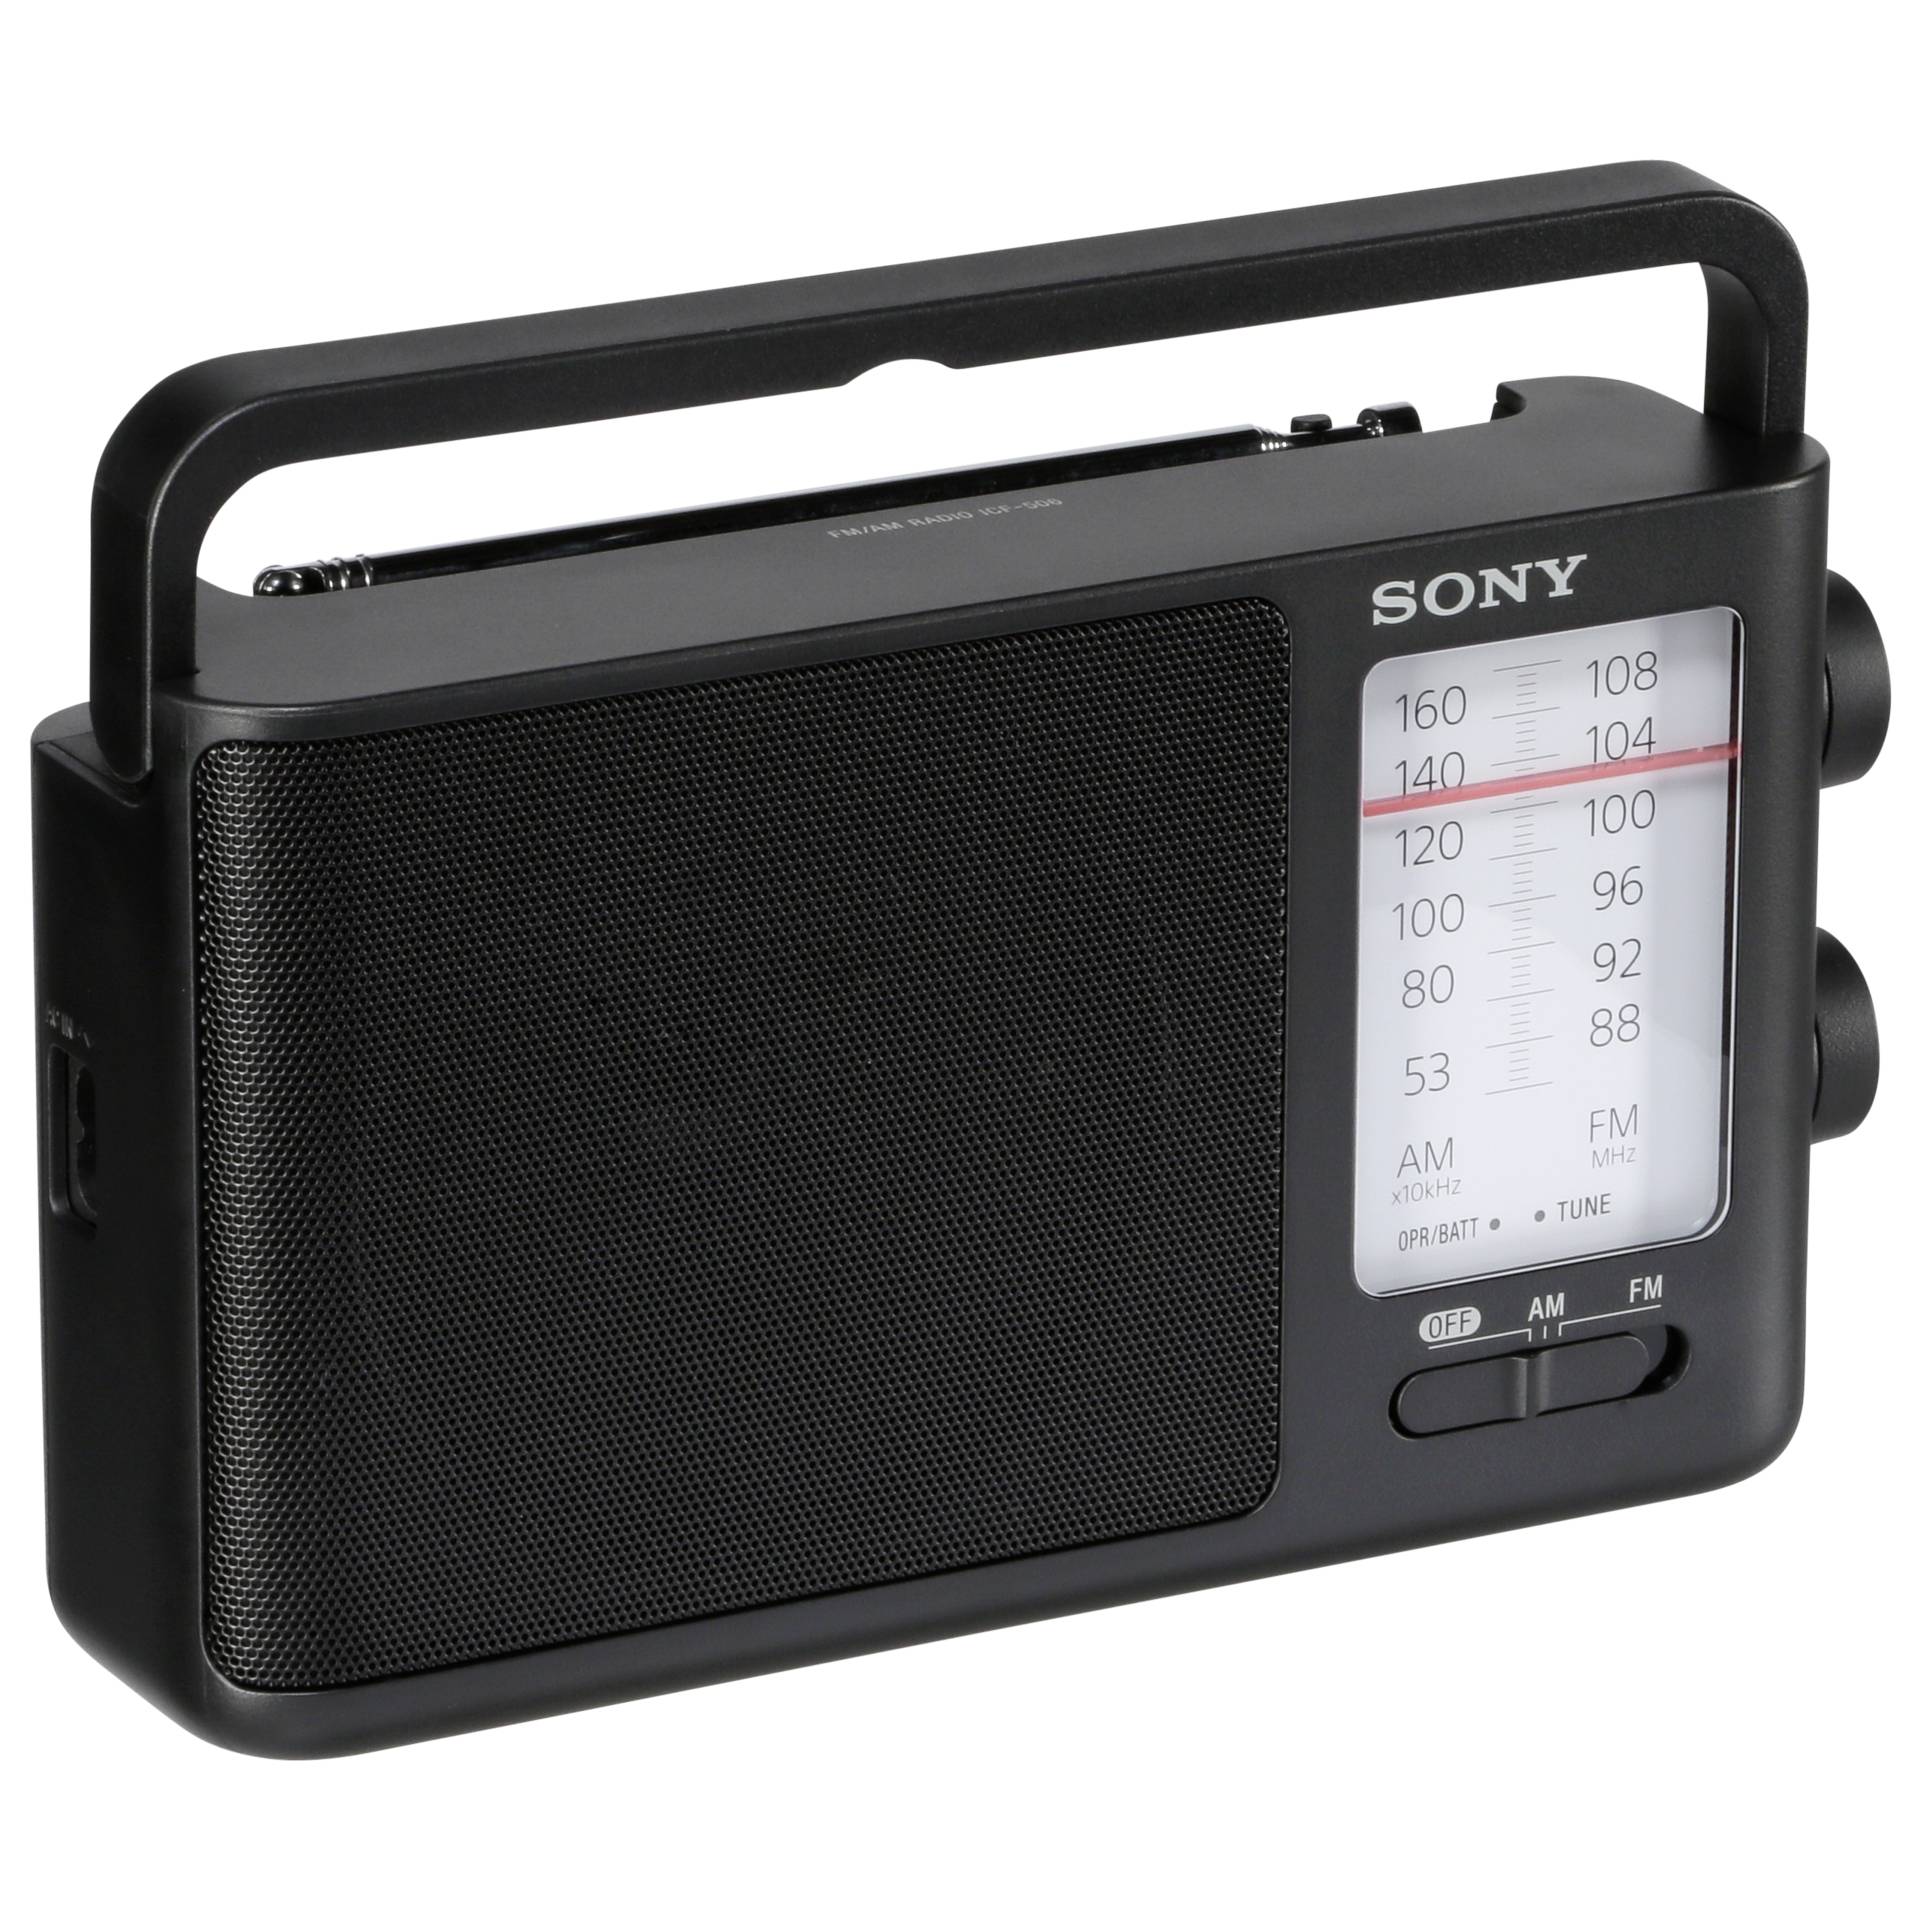 Sony -Radio ICF-506 -Sony Accessories